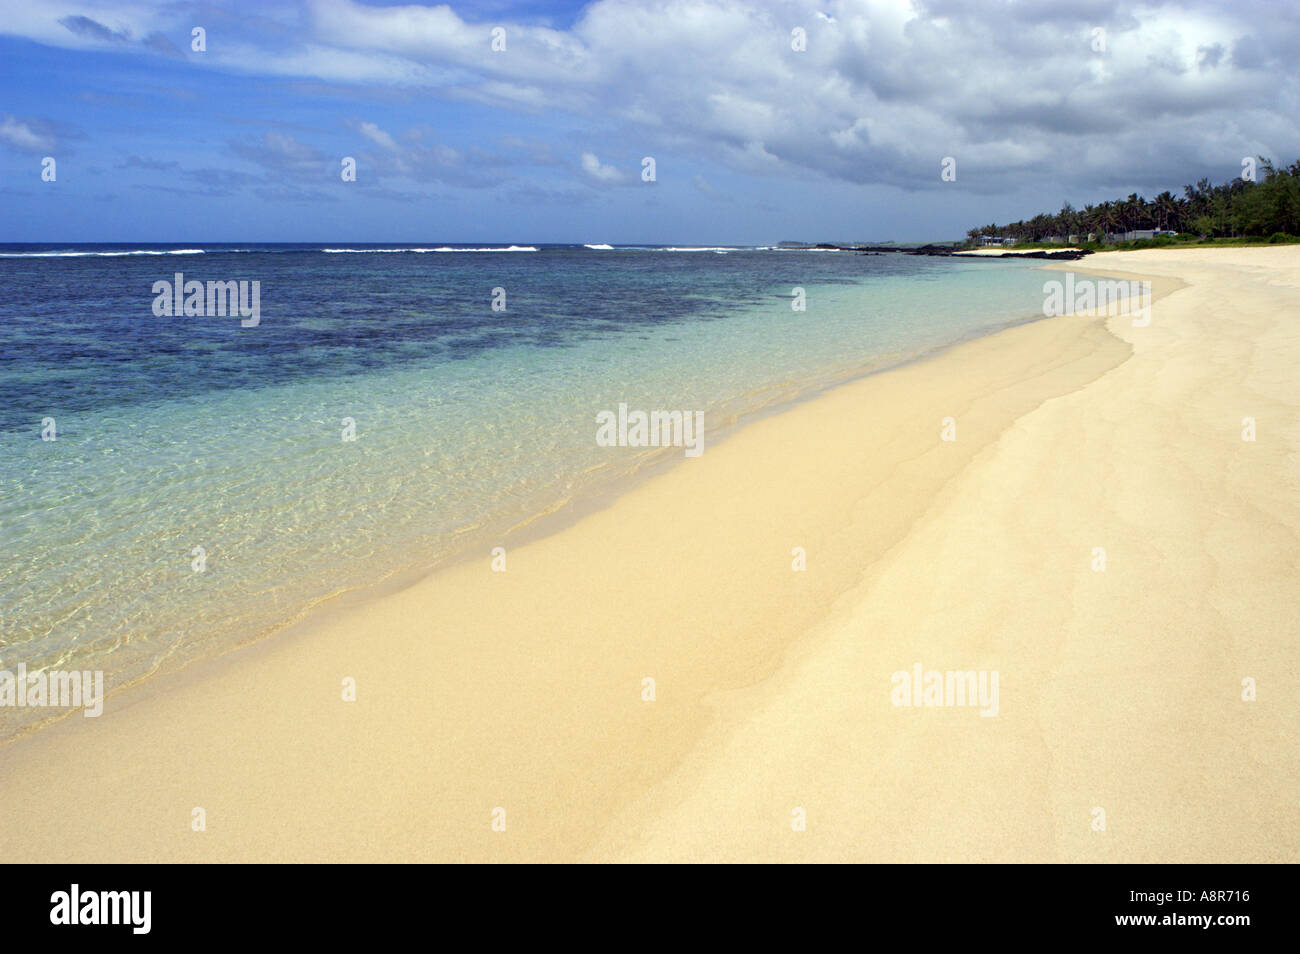 paradisiacal sandy beach Stock Photo